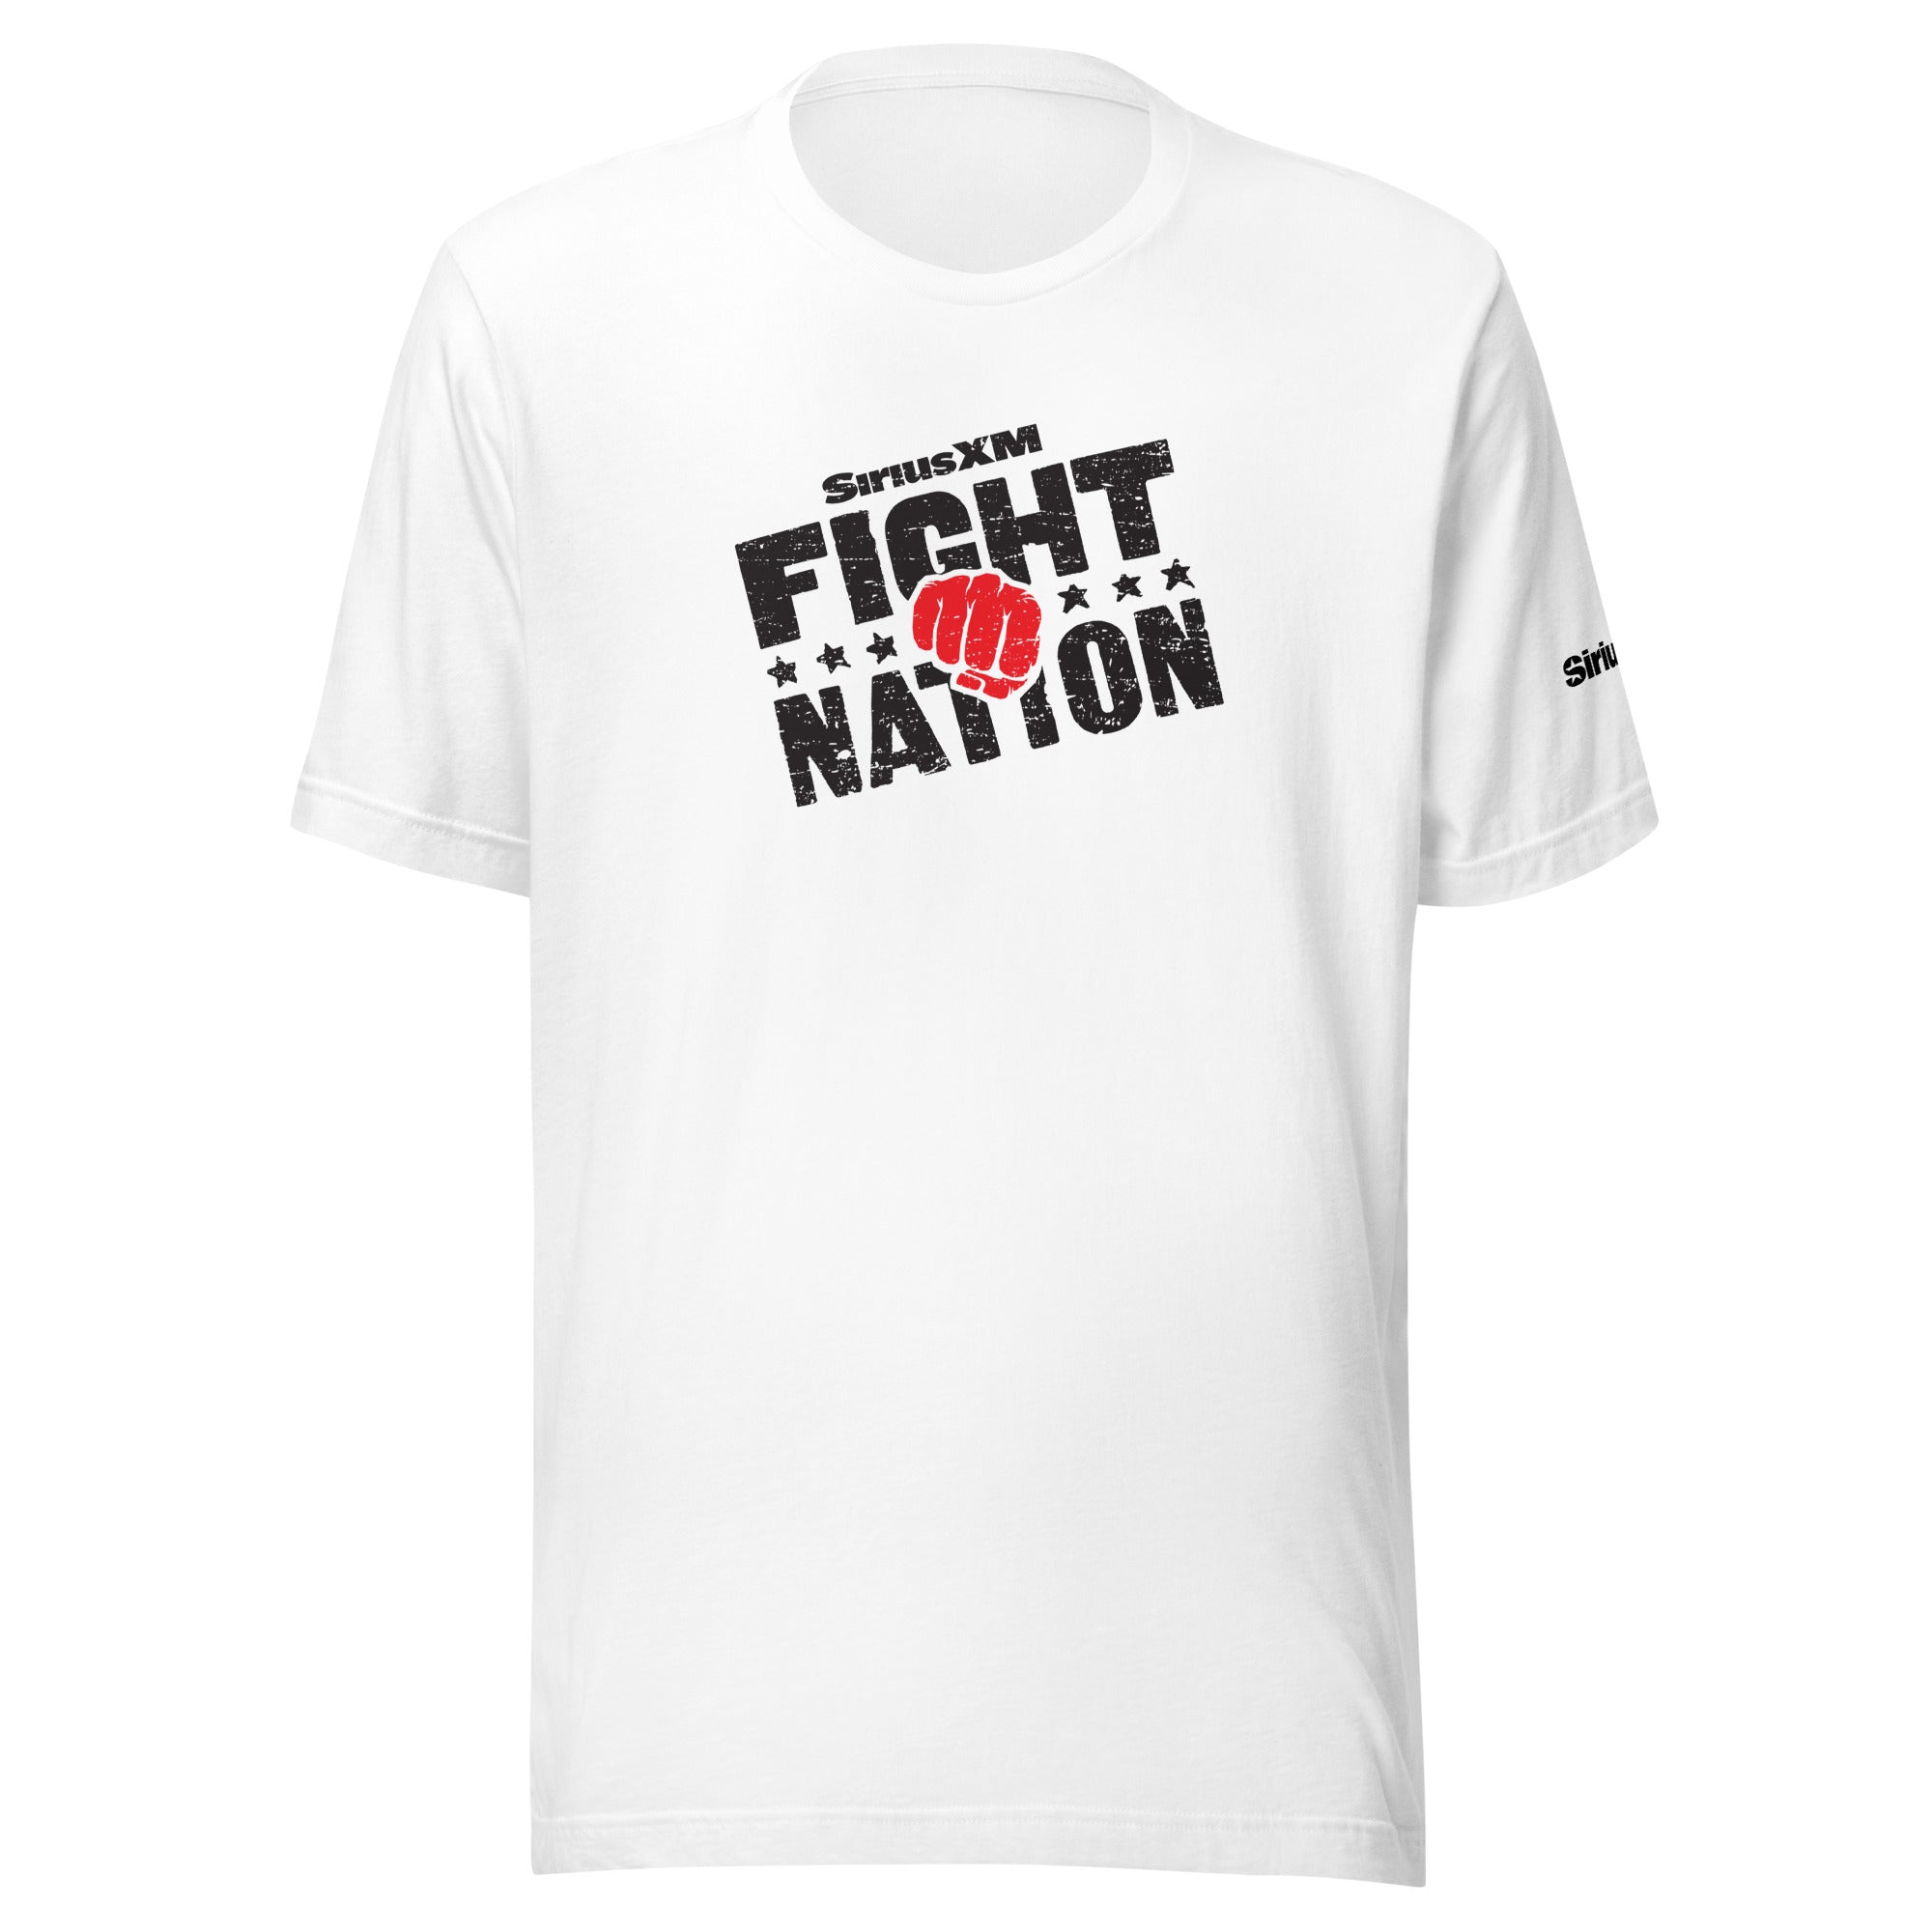 Fight Nation: T-shirt (White)